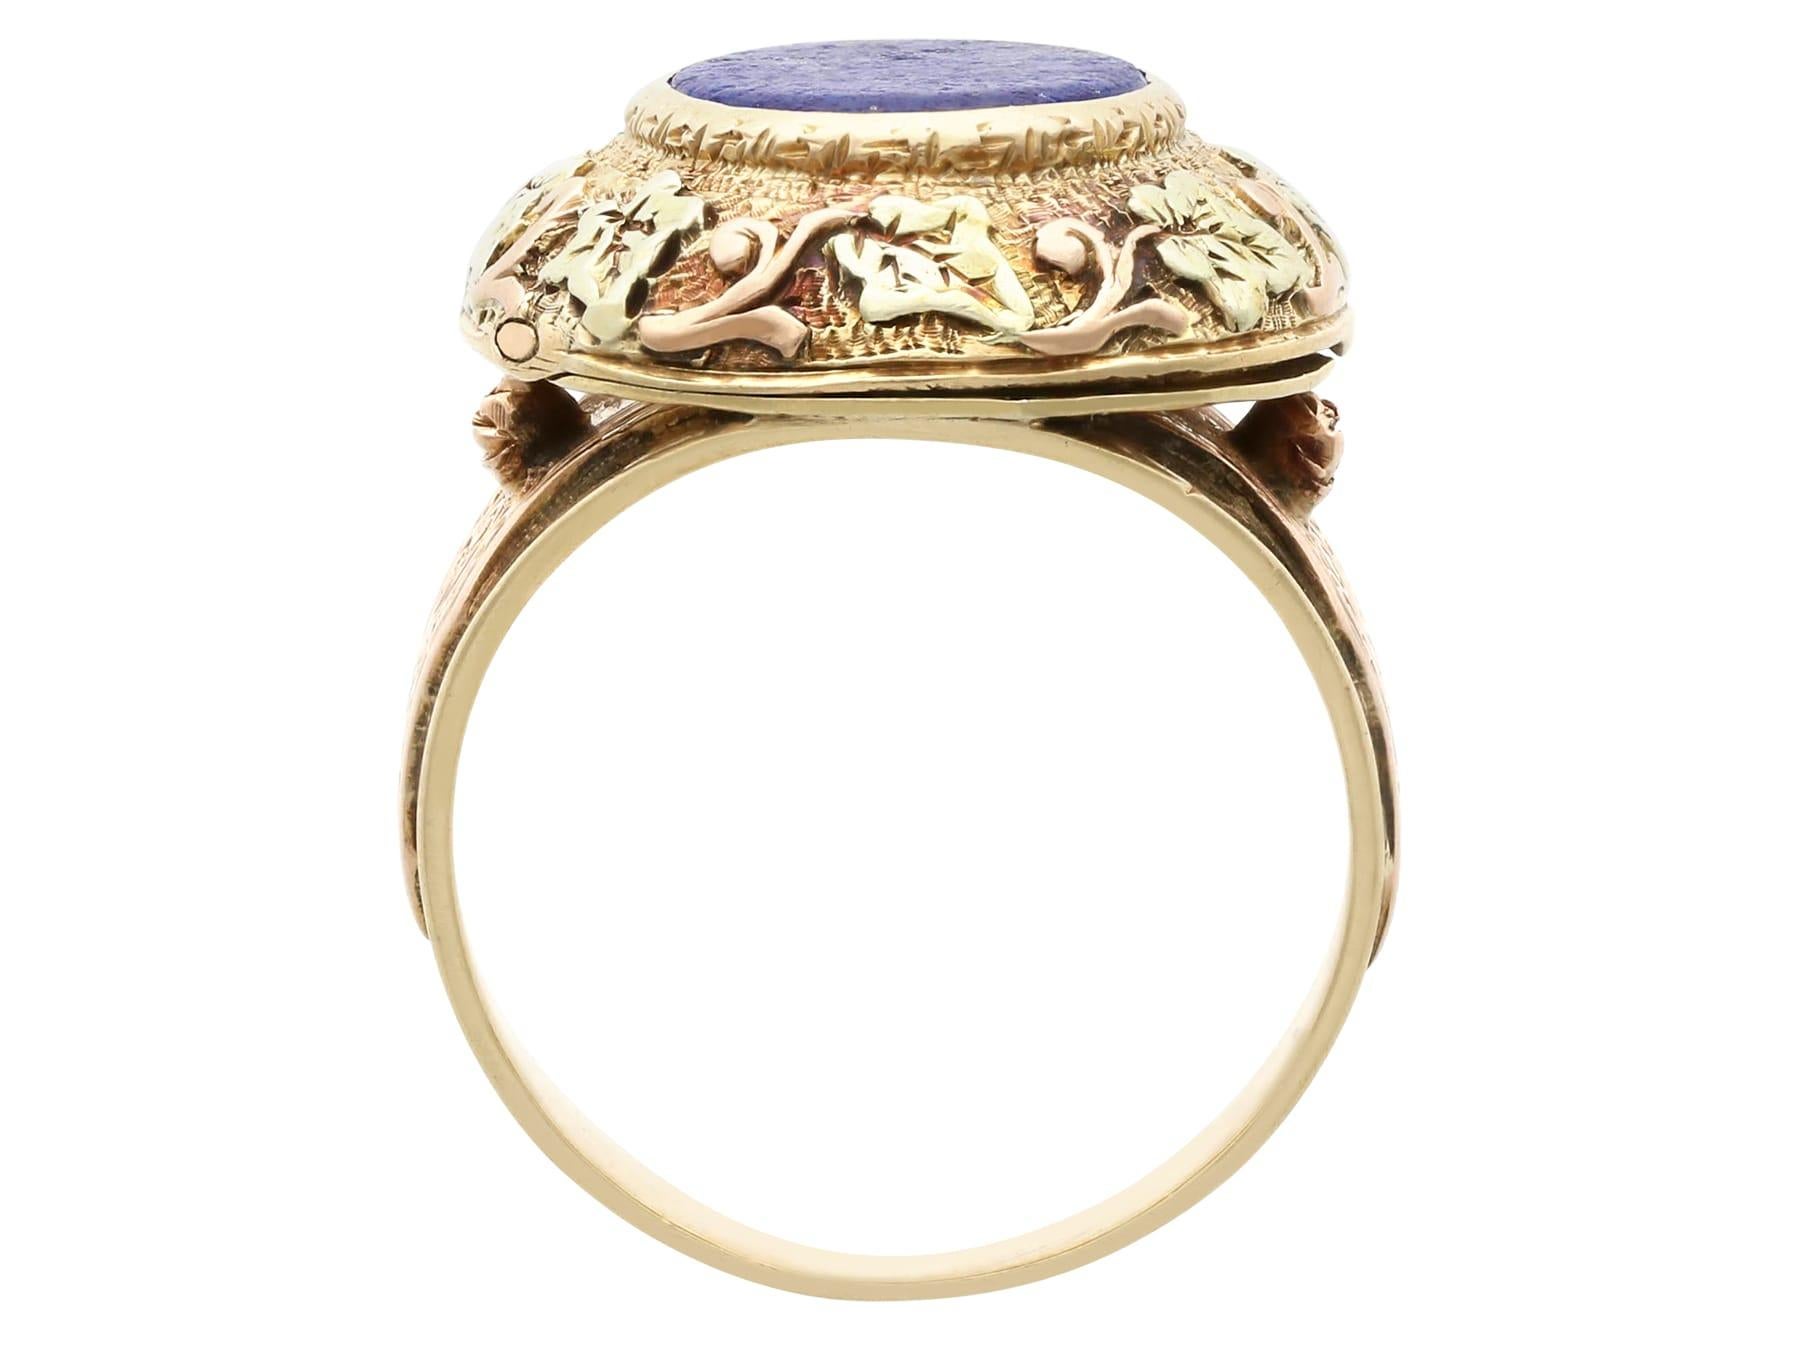 Antique 3.02Ct Lapis Lazuli and 15k Yellow Gold Locket Ring Circa 1880 For Sale 4